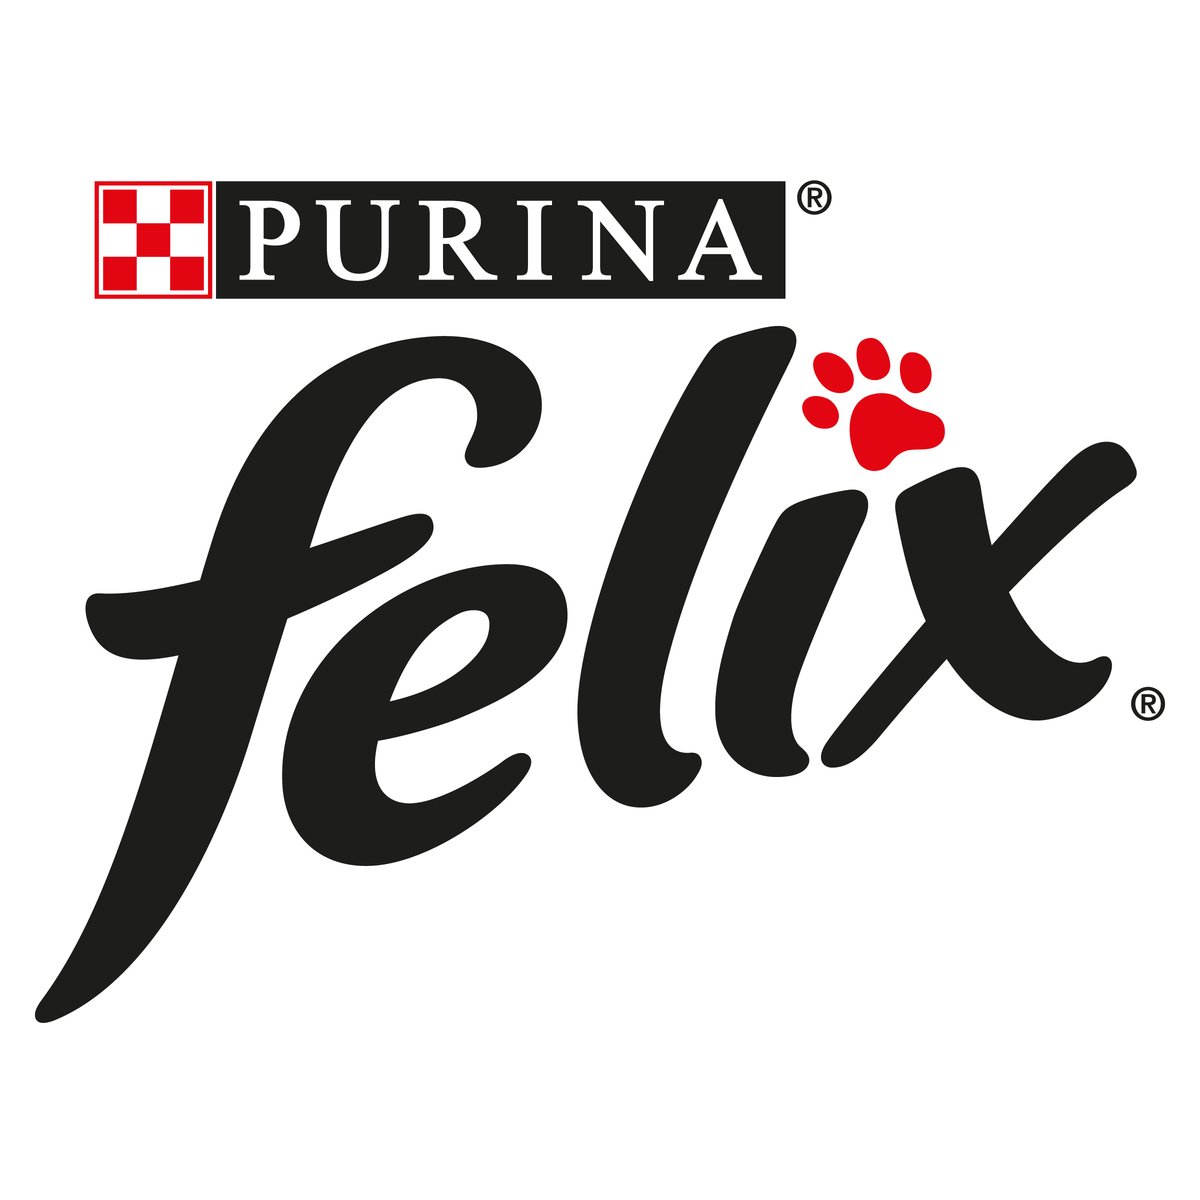 Felix Junior As Good as it Looks Chicken in Jelly Wet Cat Food 100 g